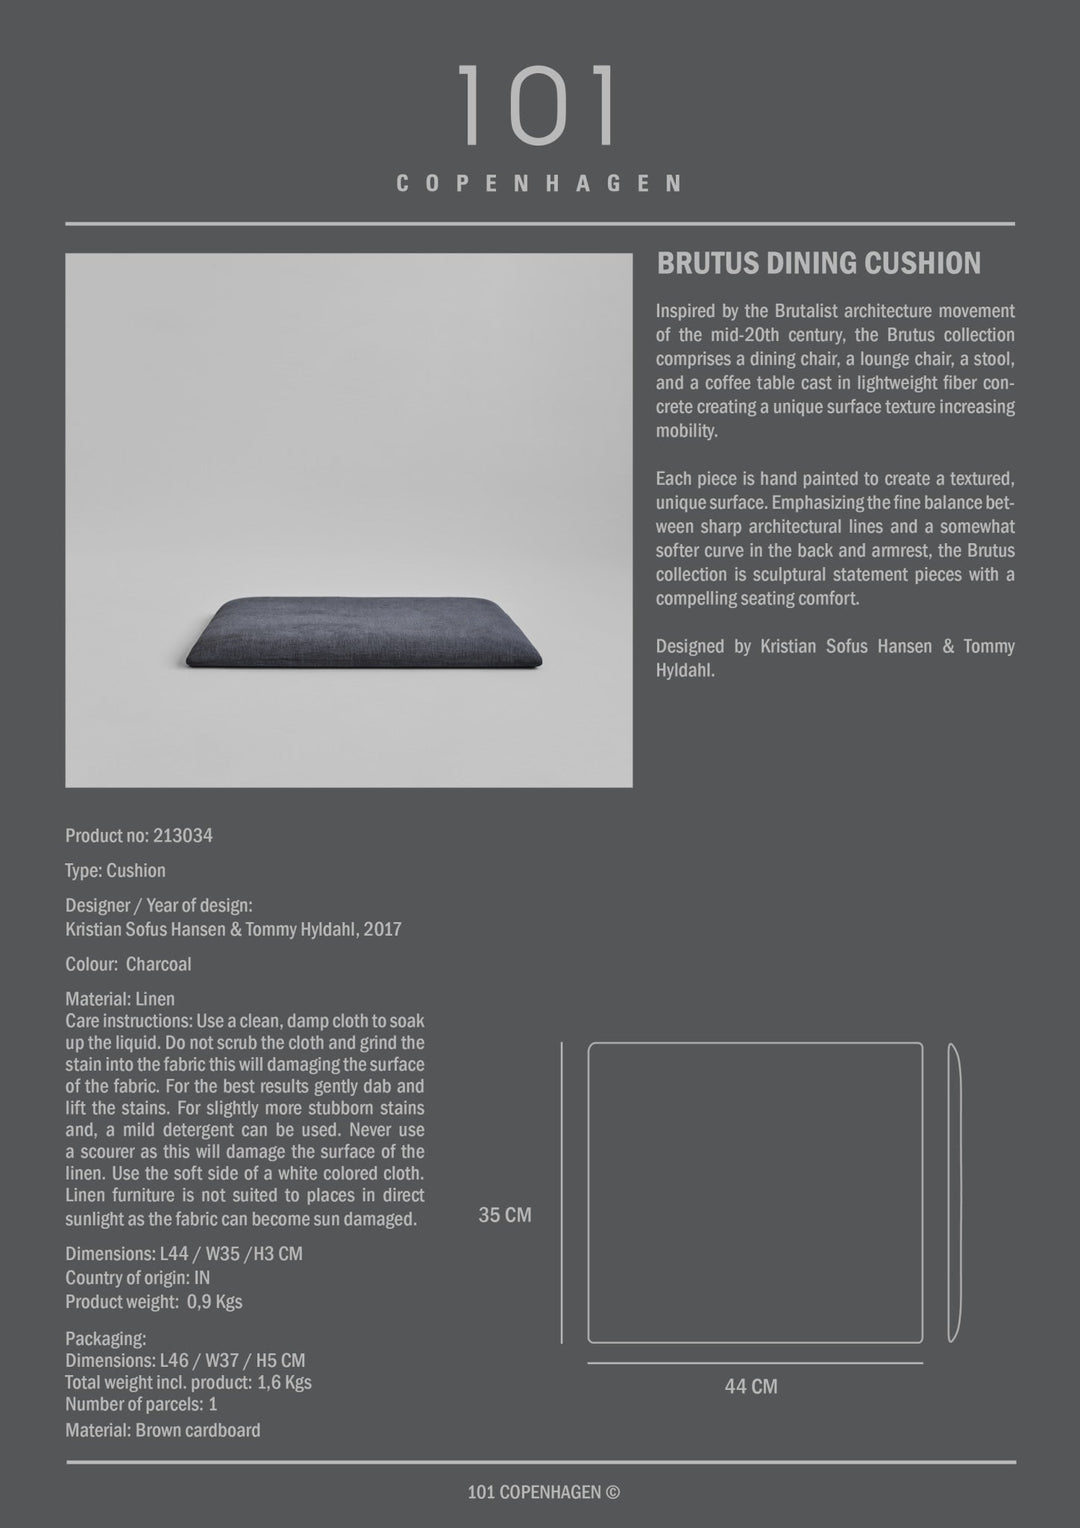 101 Copenhagen Brutus Dining Cushion - Charcoal - $125.00